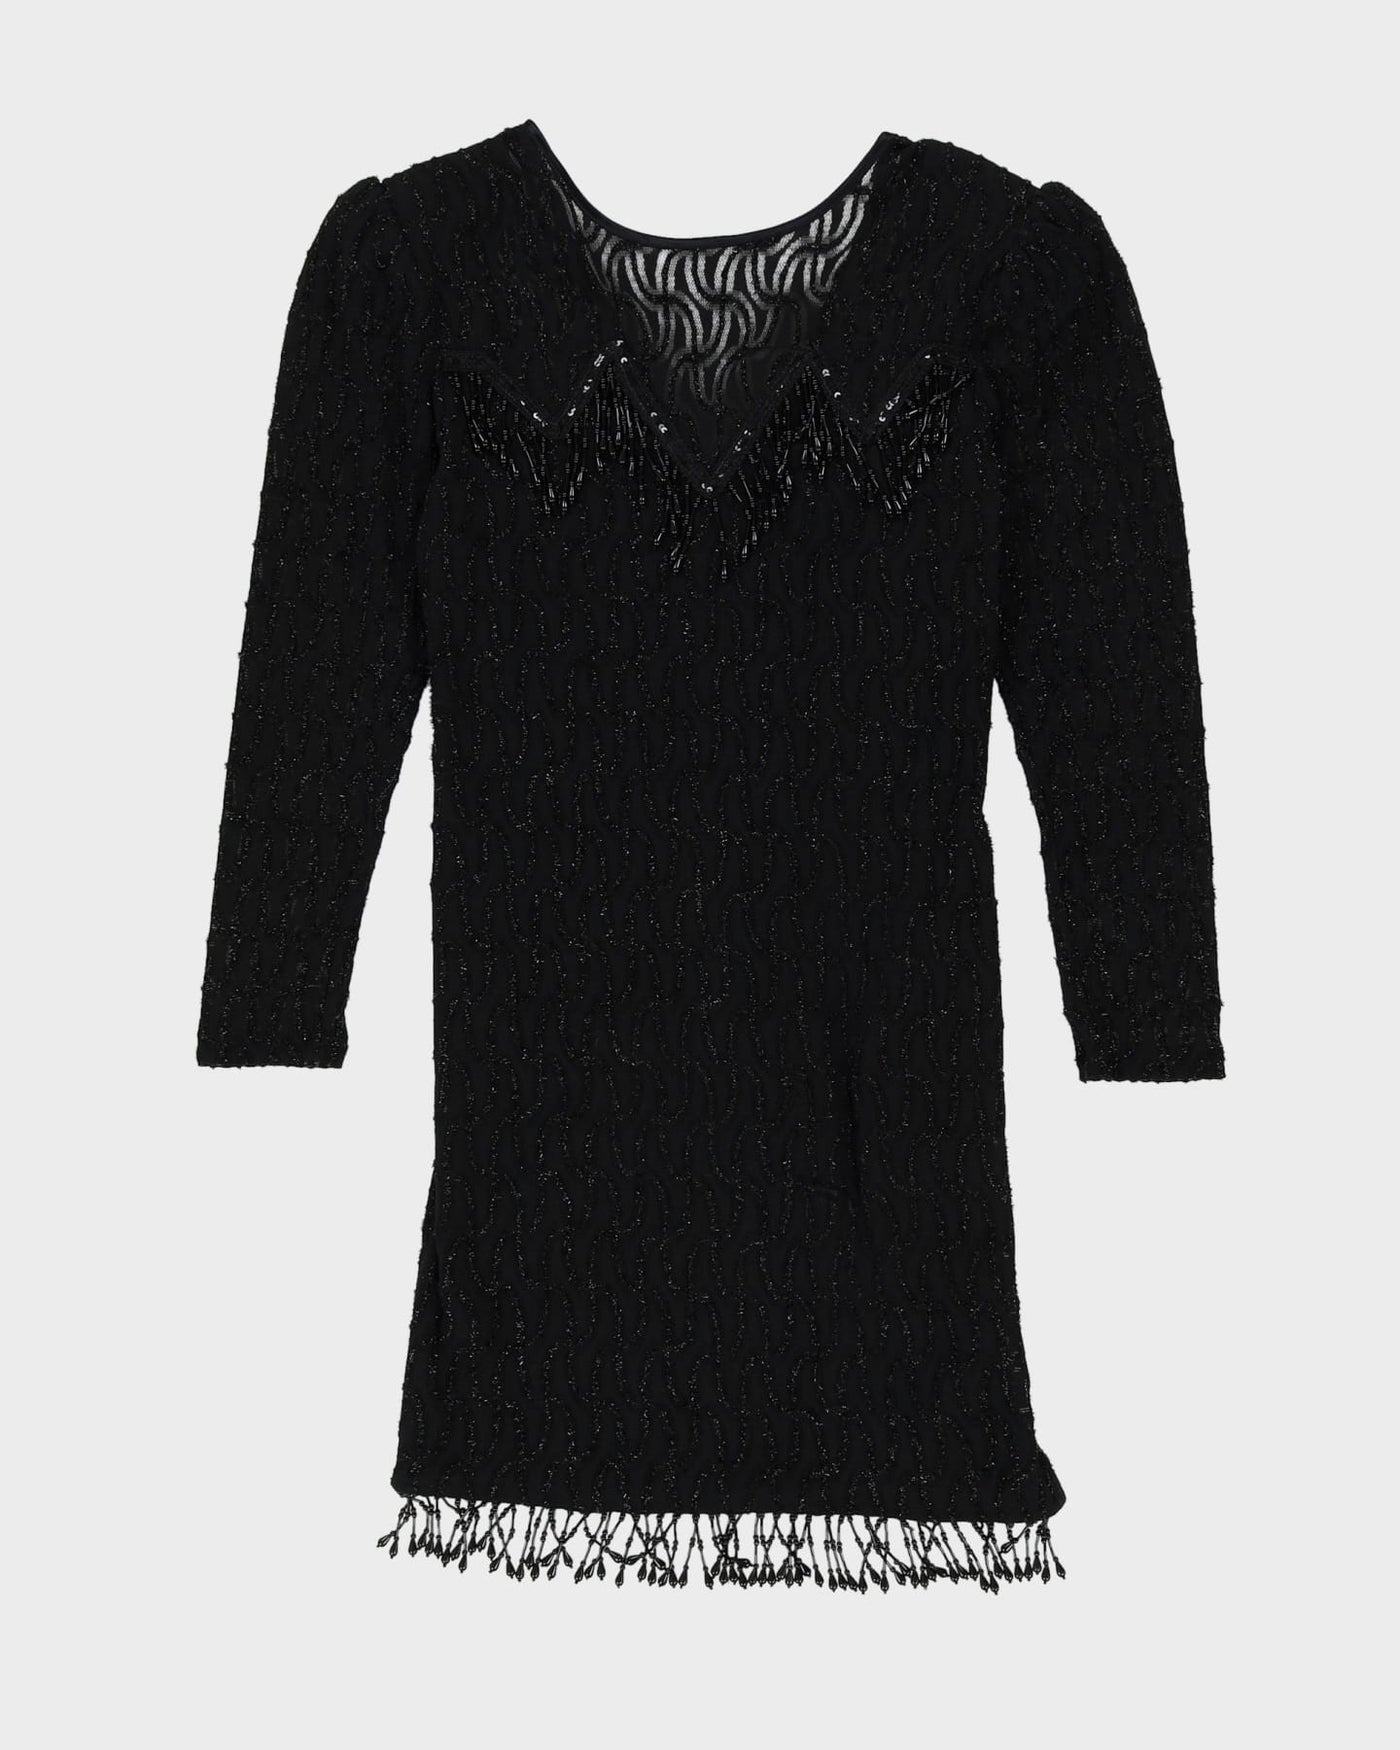 1990s Black Beaded Evening Dress - S